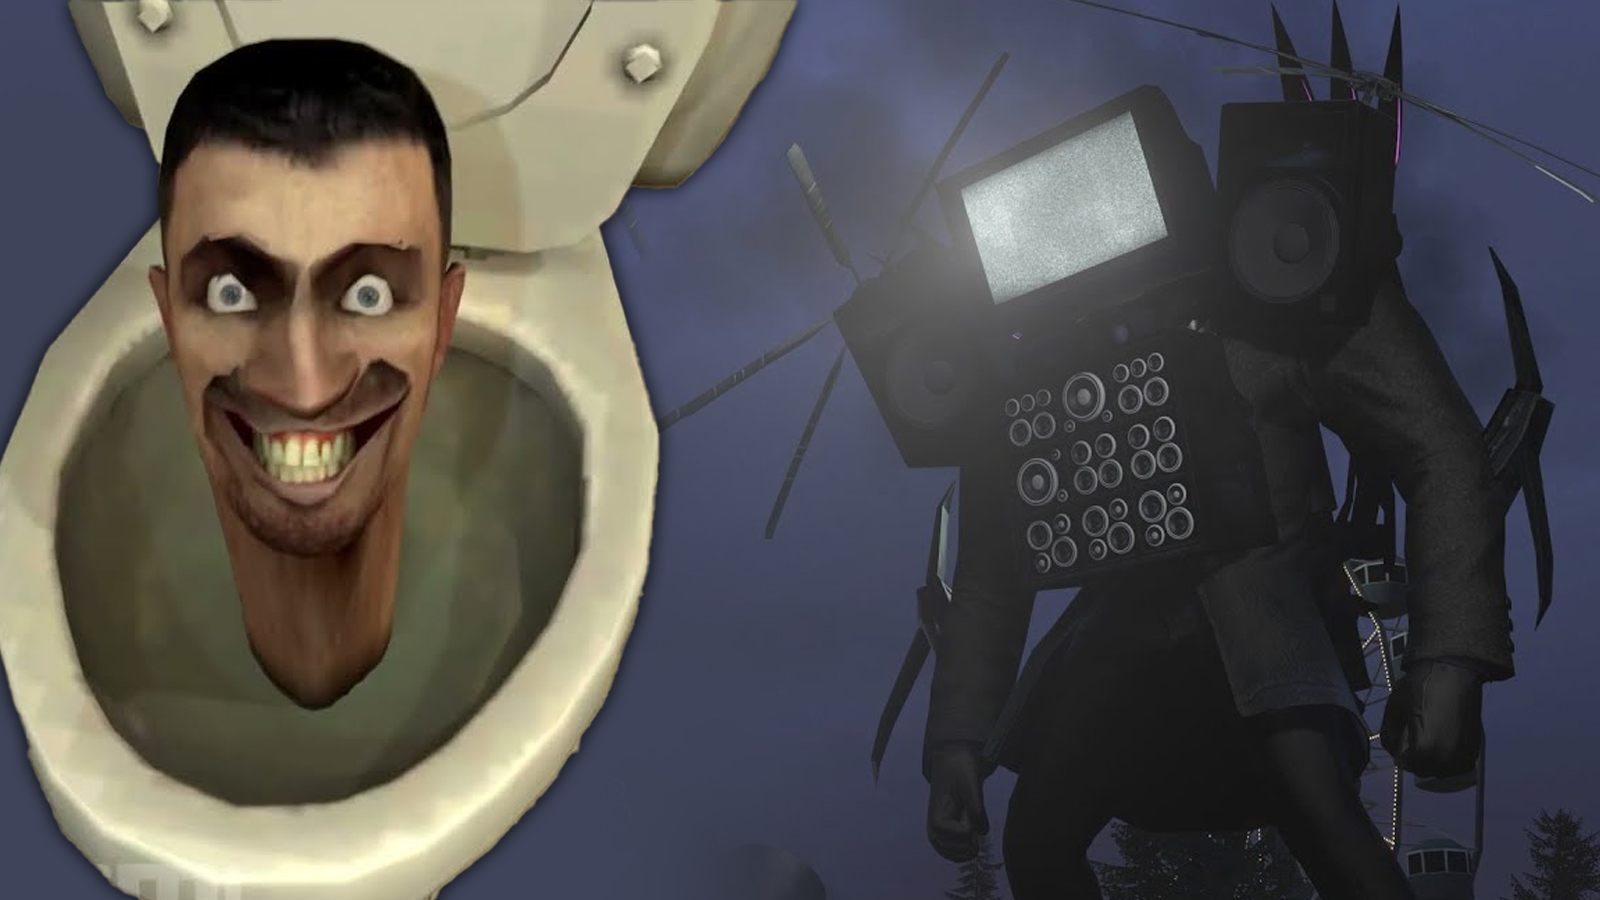 Titan Cameraman could beat titan speakerman and gman toilet alone